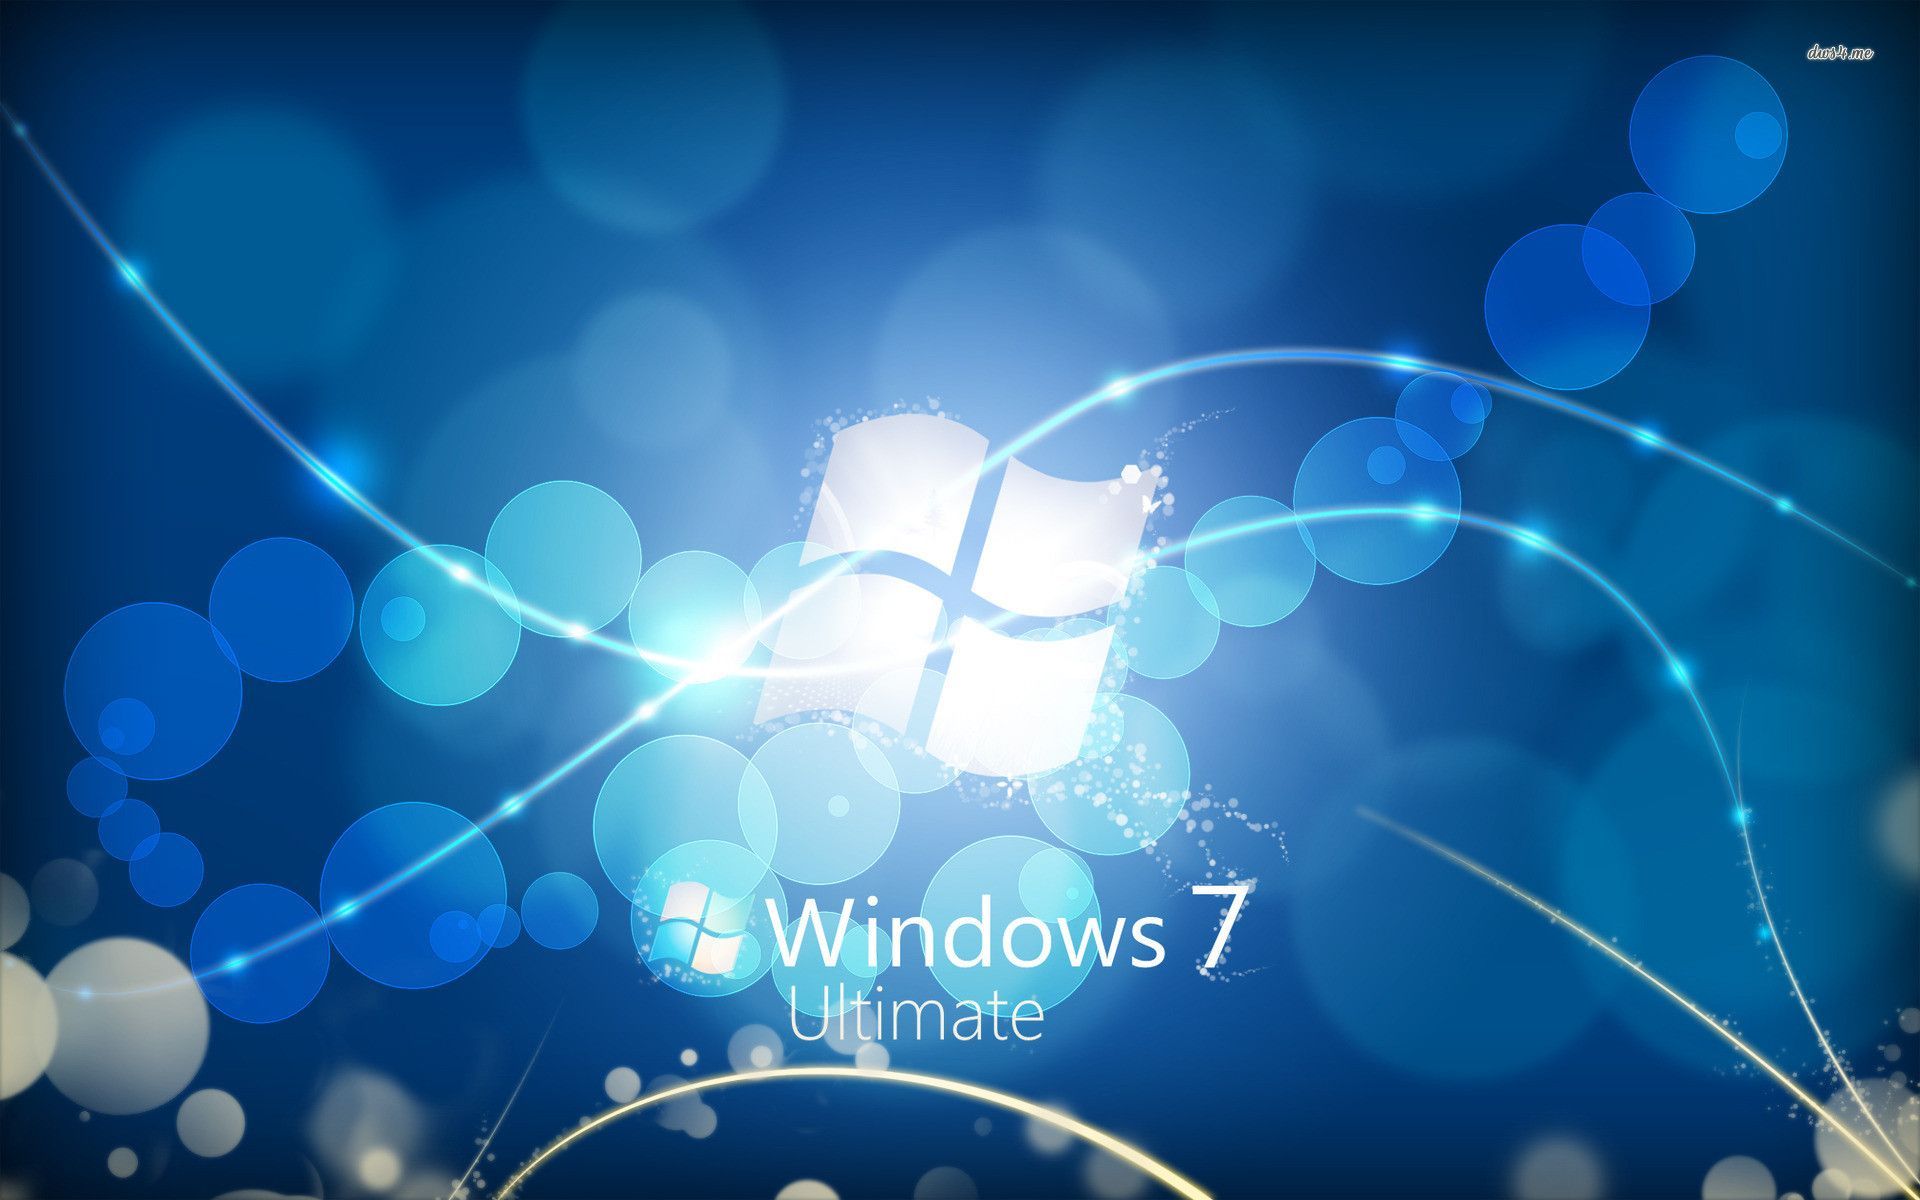 Windows 7 Ultimate Wallpapers HD - Wallpaper Cave